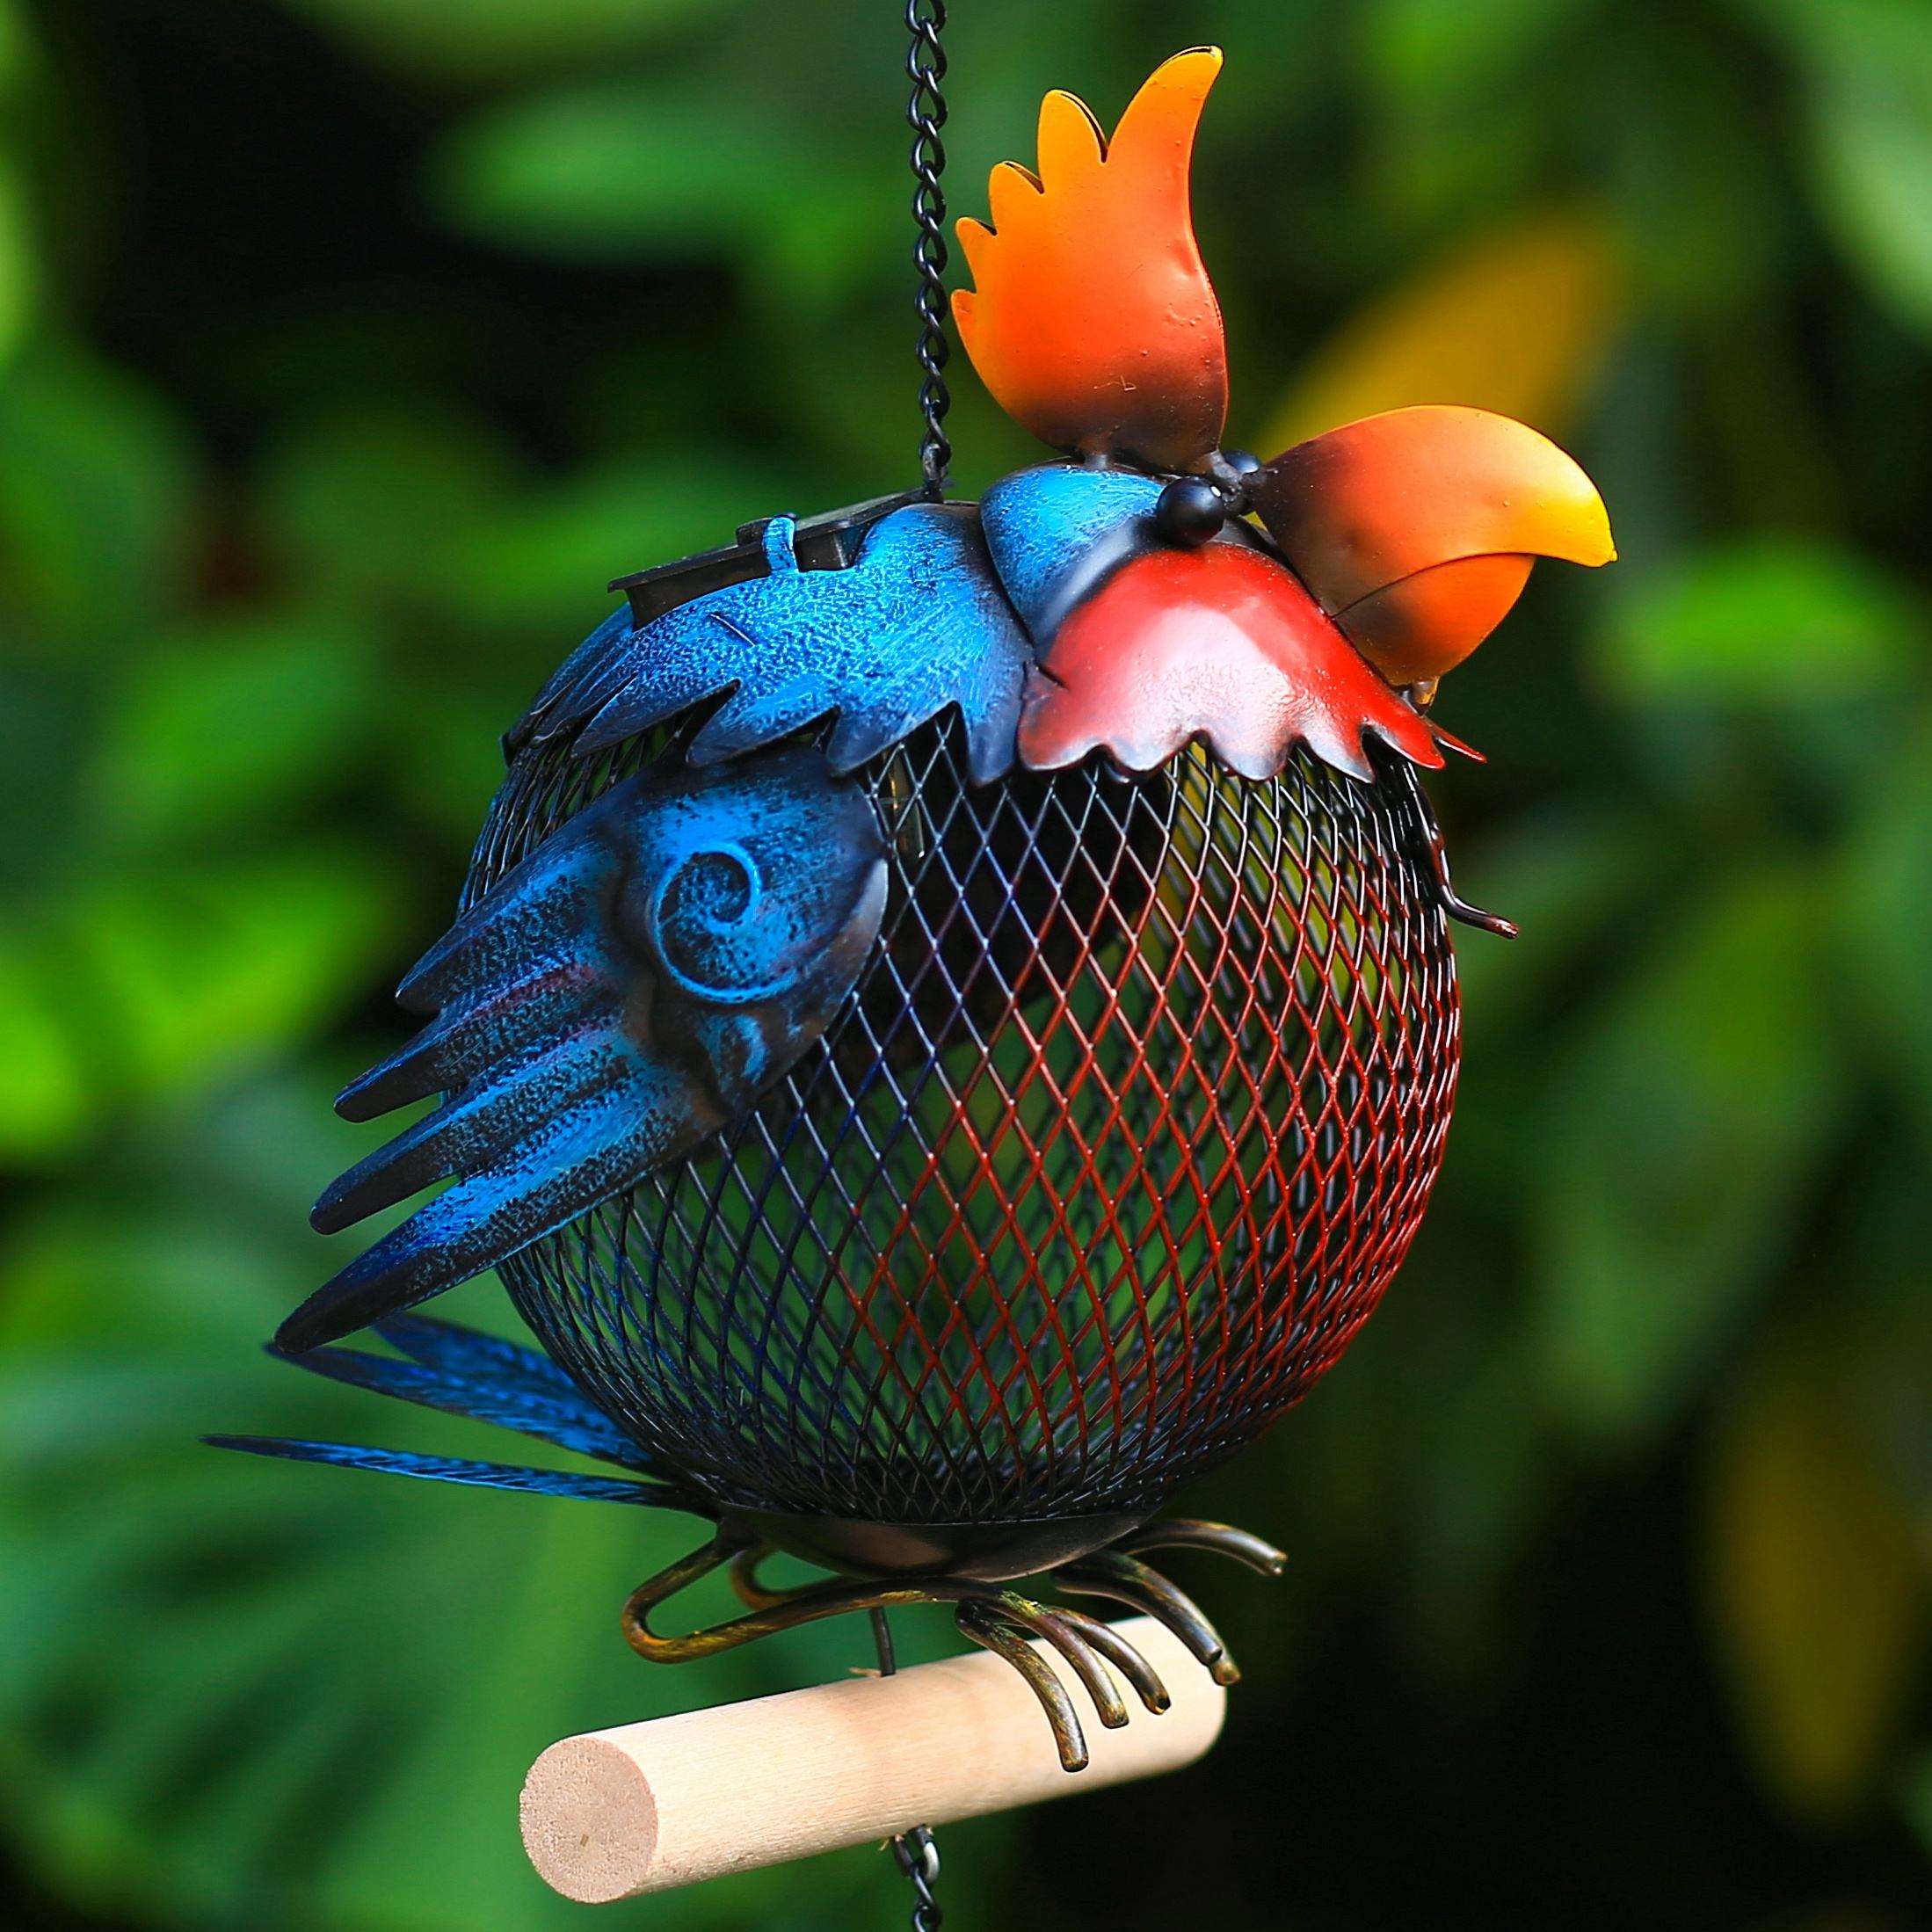 Outdoor Hanging Cute Metal Animal Shaped Mesh Feeder For Garden Yard Bird Lovers Decoration